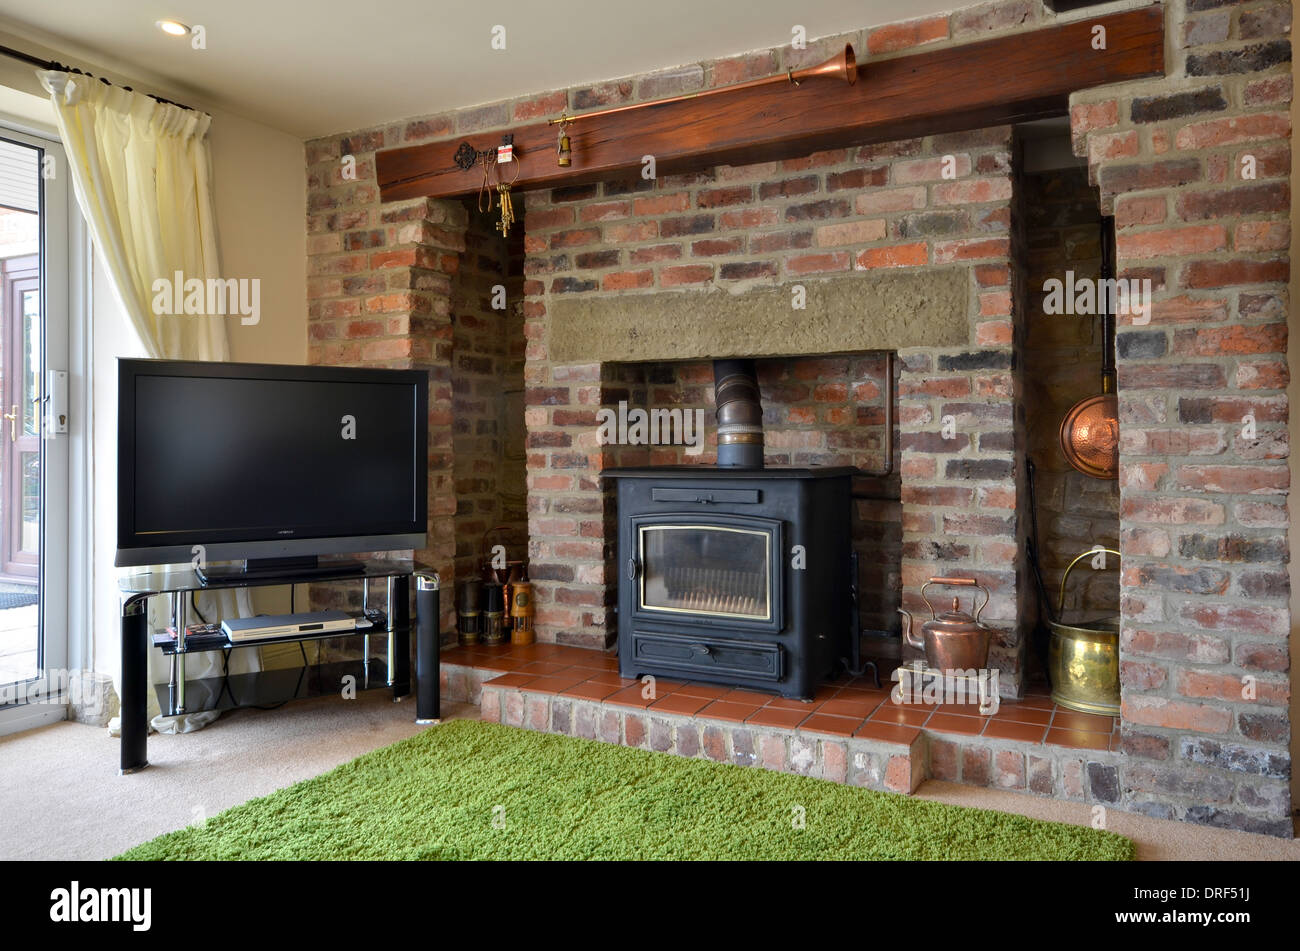 Brick fireplace with wood burning stove and flatscreen television Stock Photo